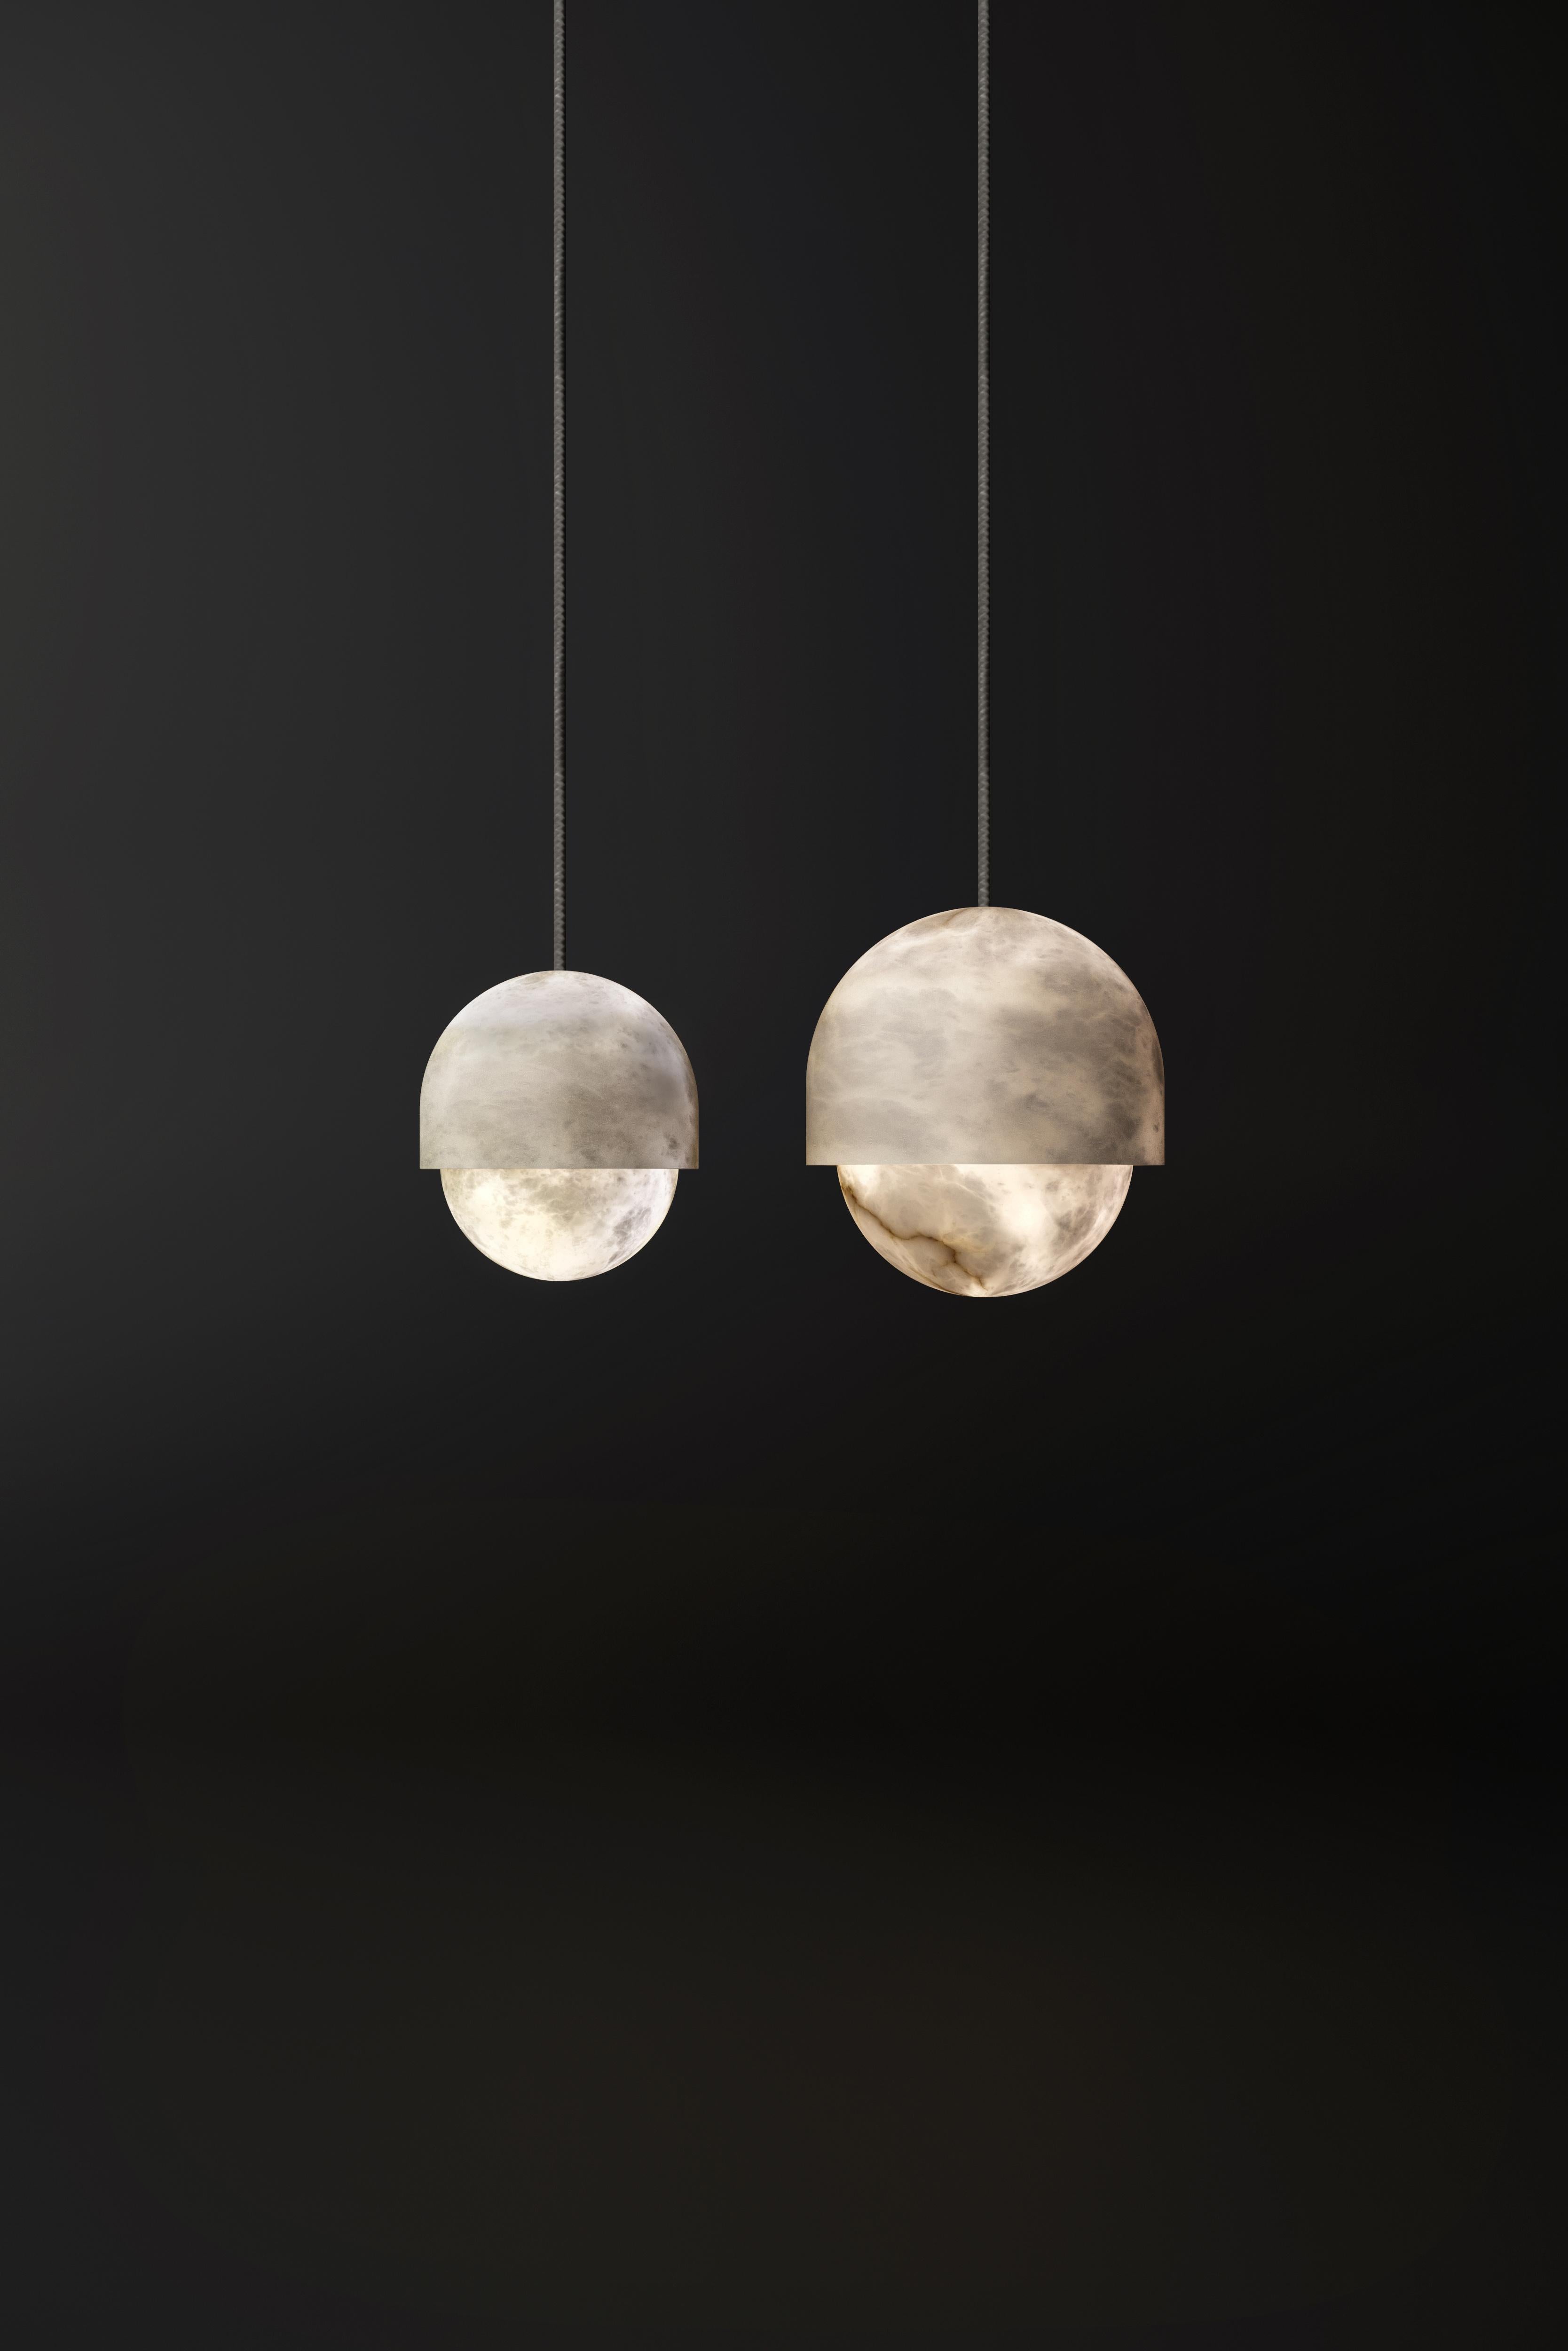 Set of 2 Alabaster Yoko pendant light by Atelier Alain Ellouz.
Collection Edition
Atelier Arnaud Sabatier
Dimensions: Ø 5.5